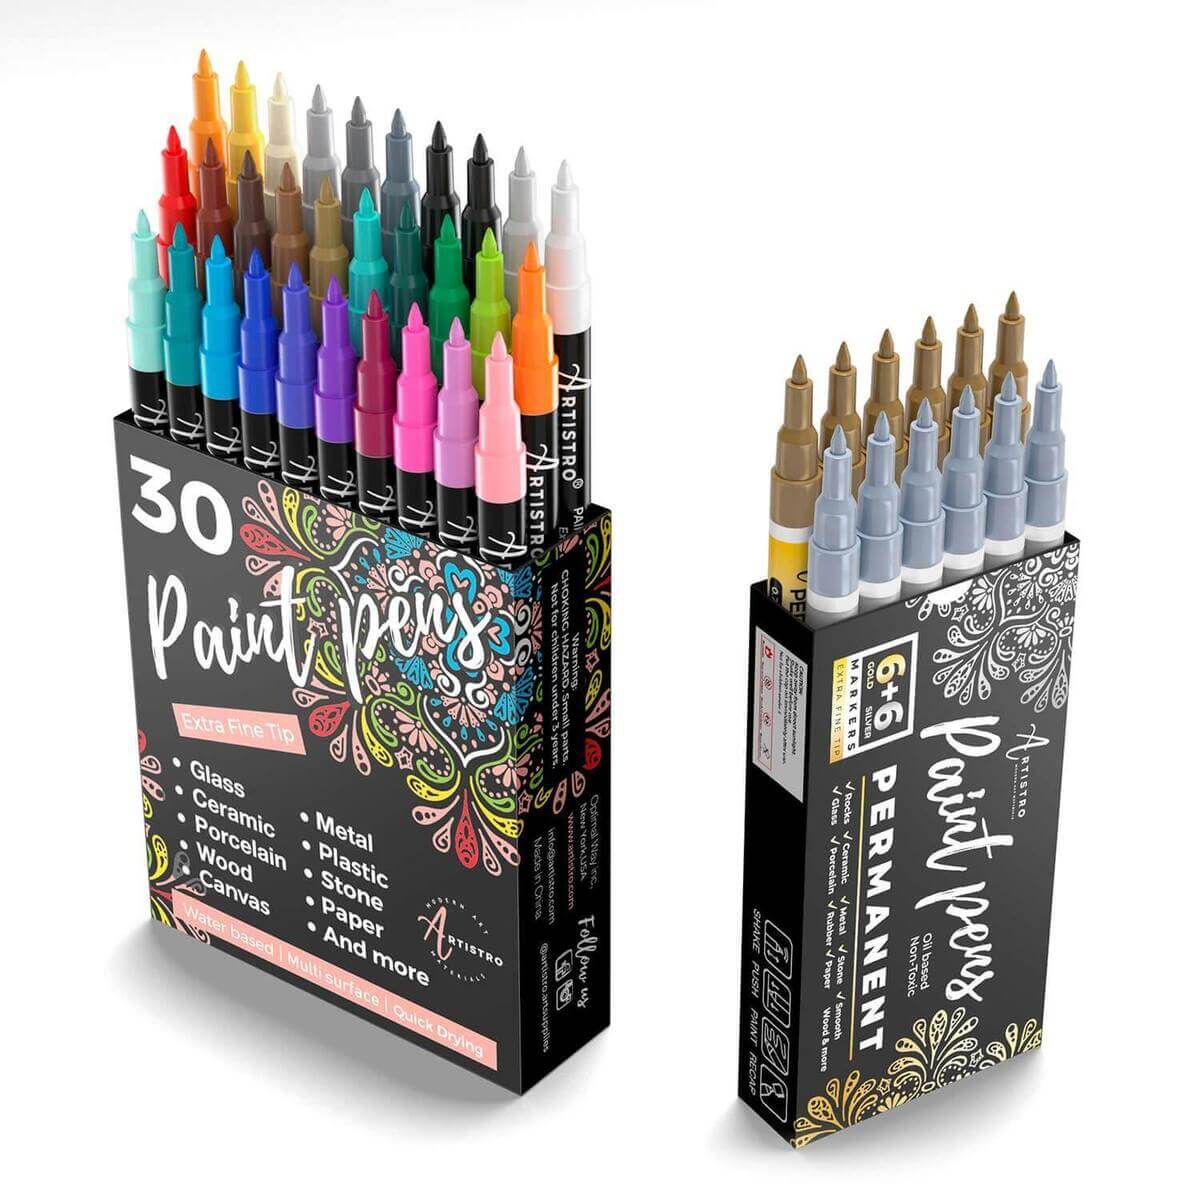 Artistro Acrylic Paint Pens, Fine Tip, 15 Colored Paint Markers